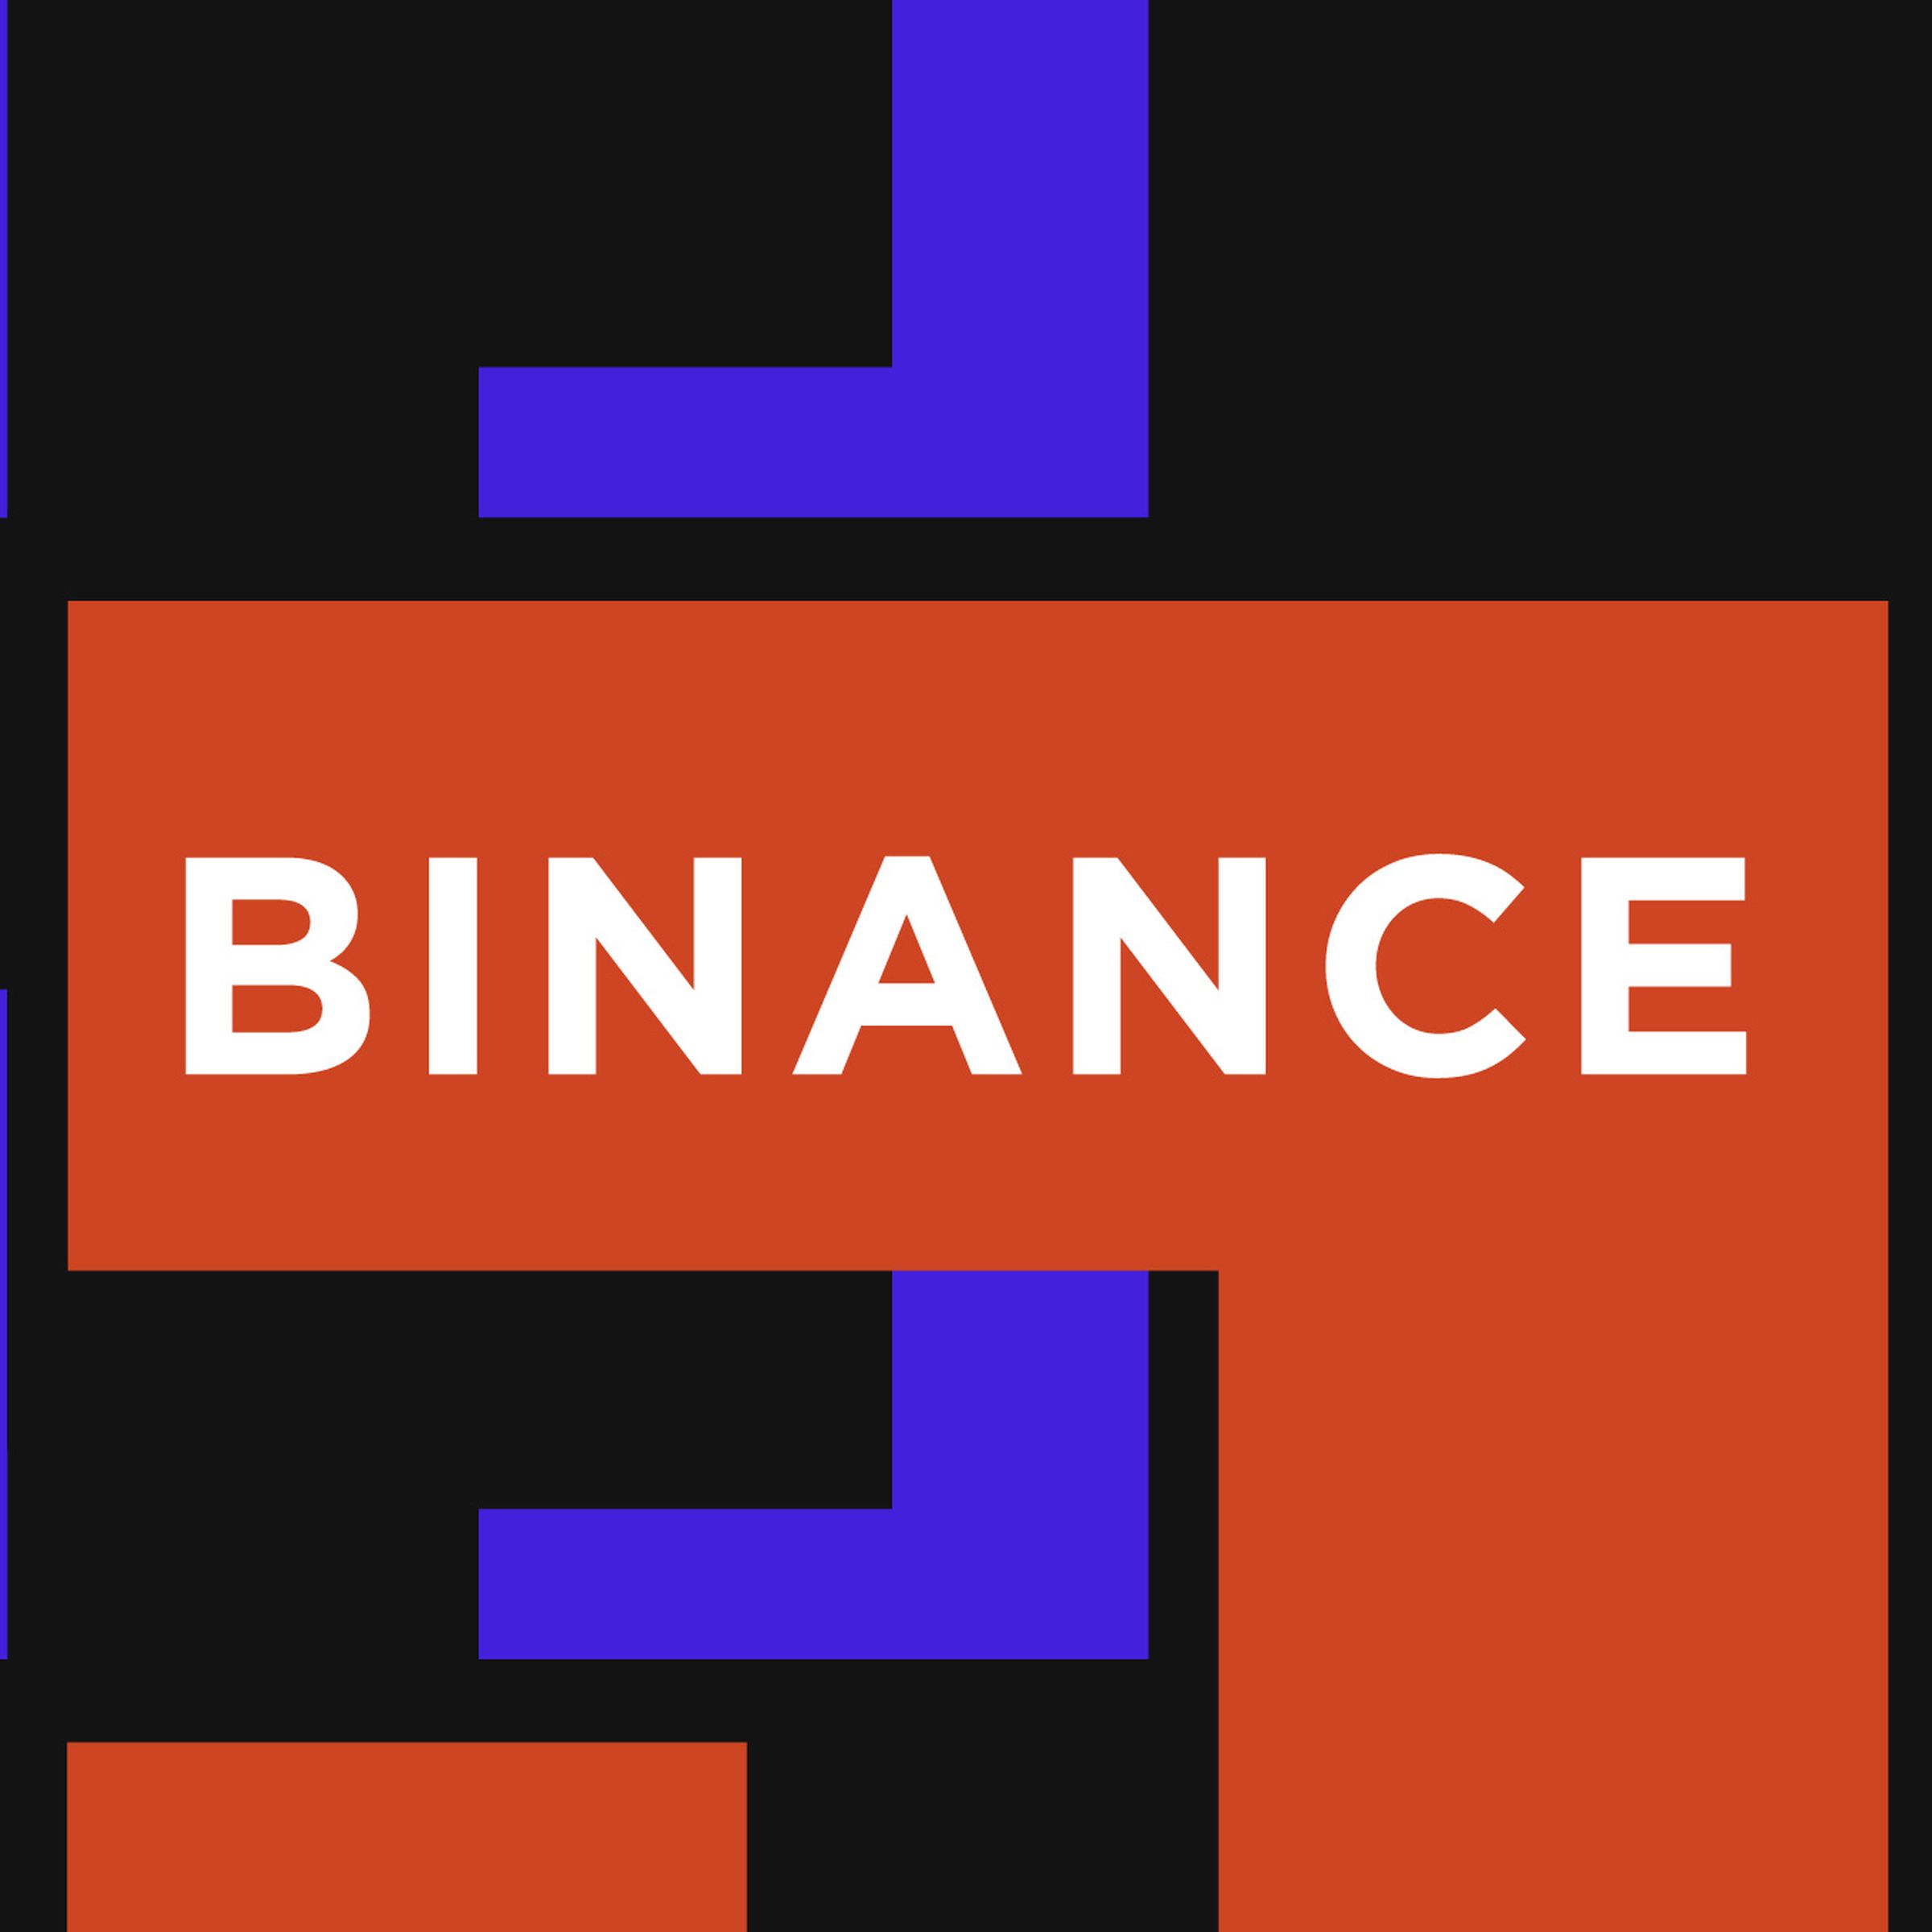 An image showing Binance’s logo